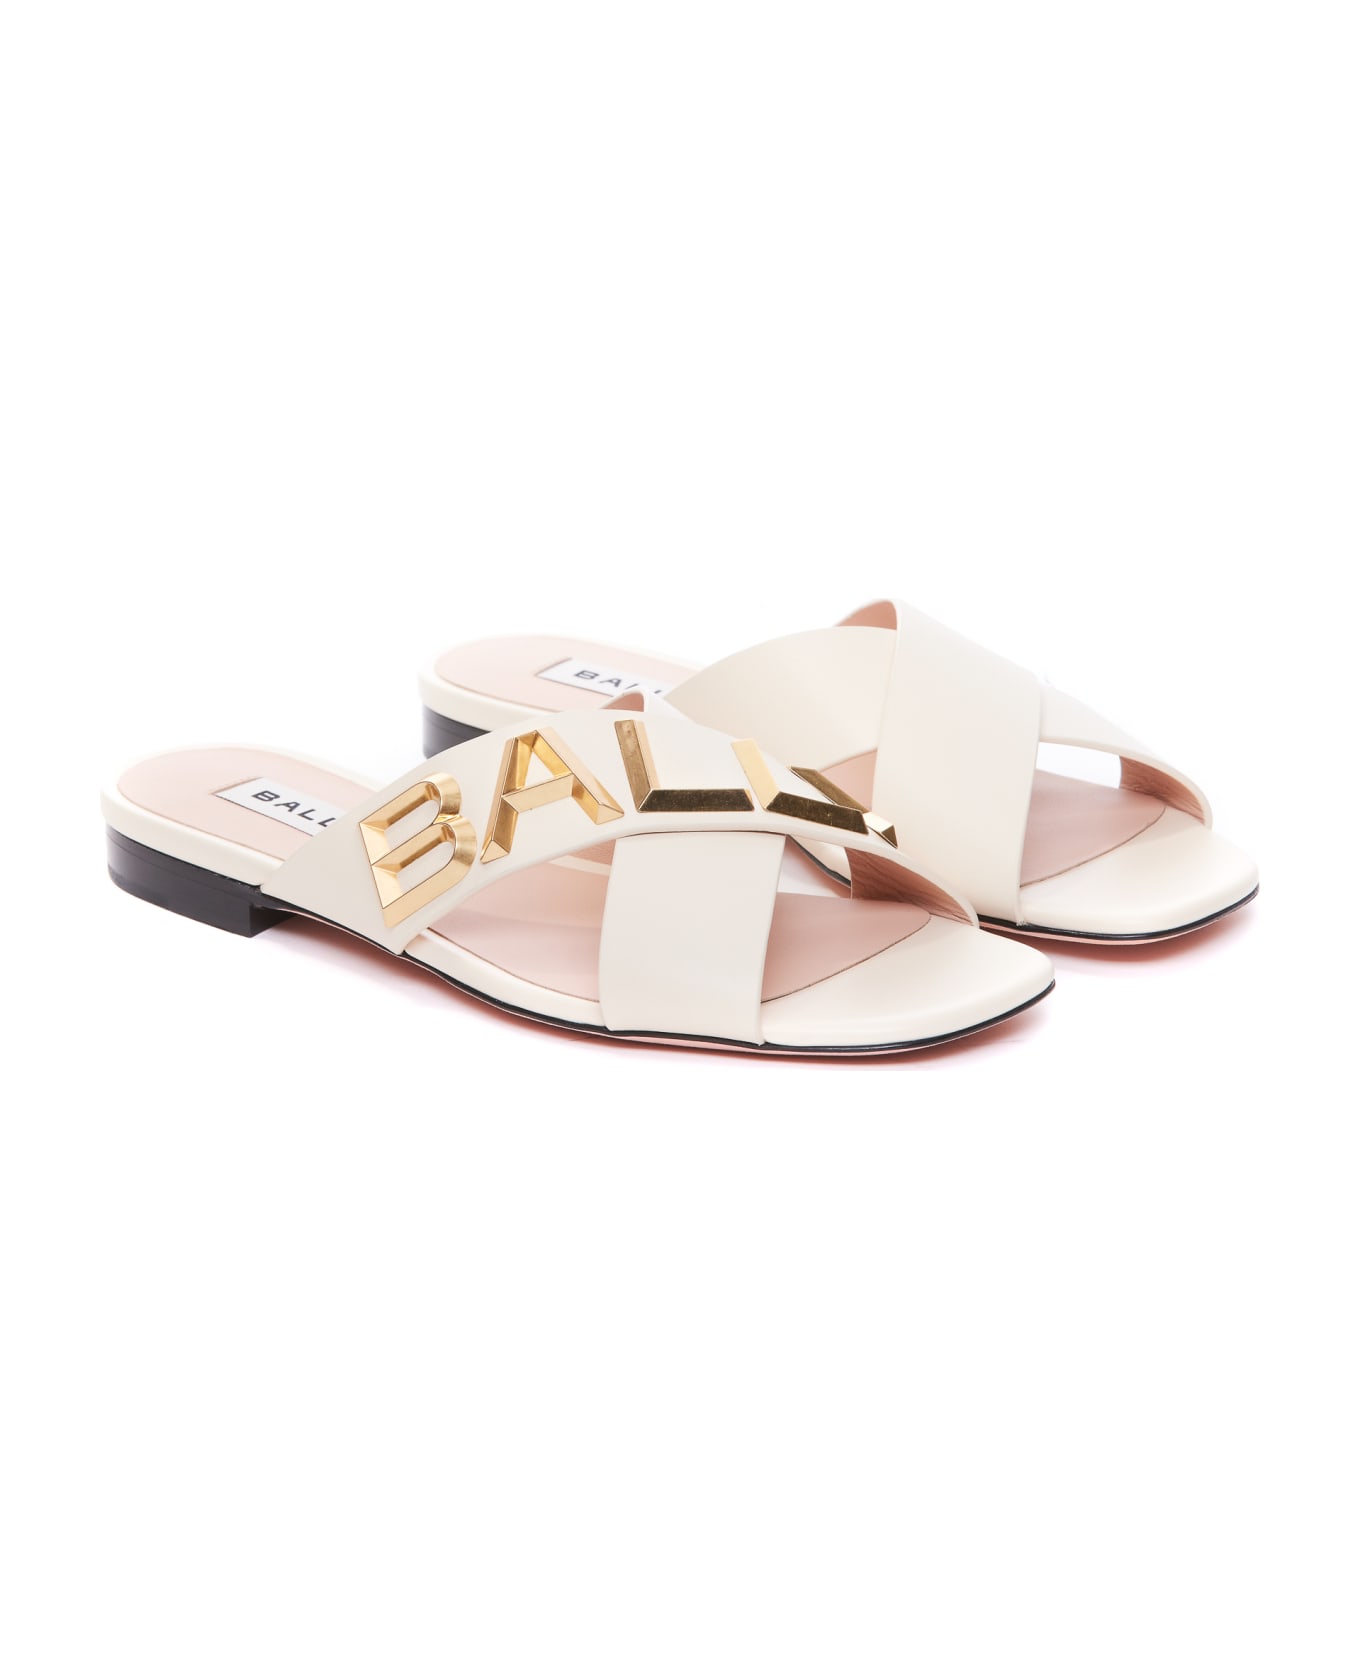 Bally Larise Flat Sandals - White サンダル